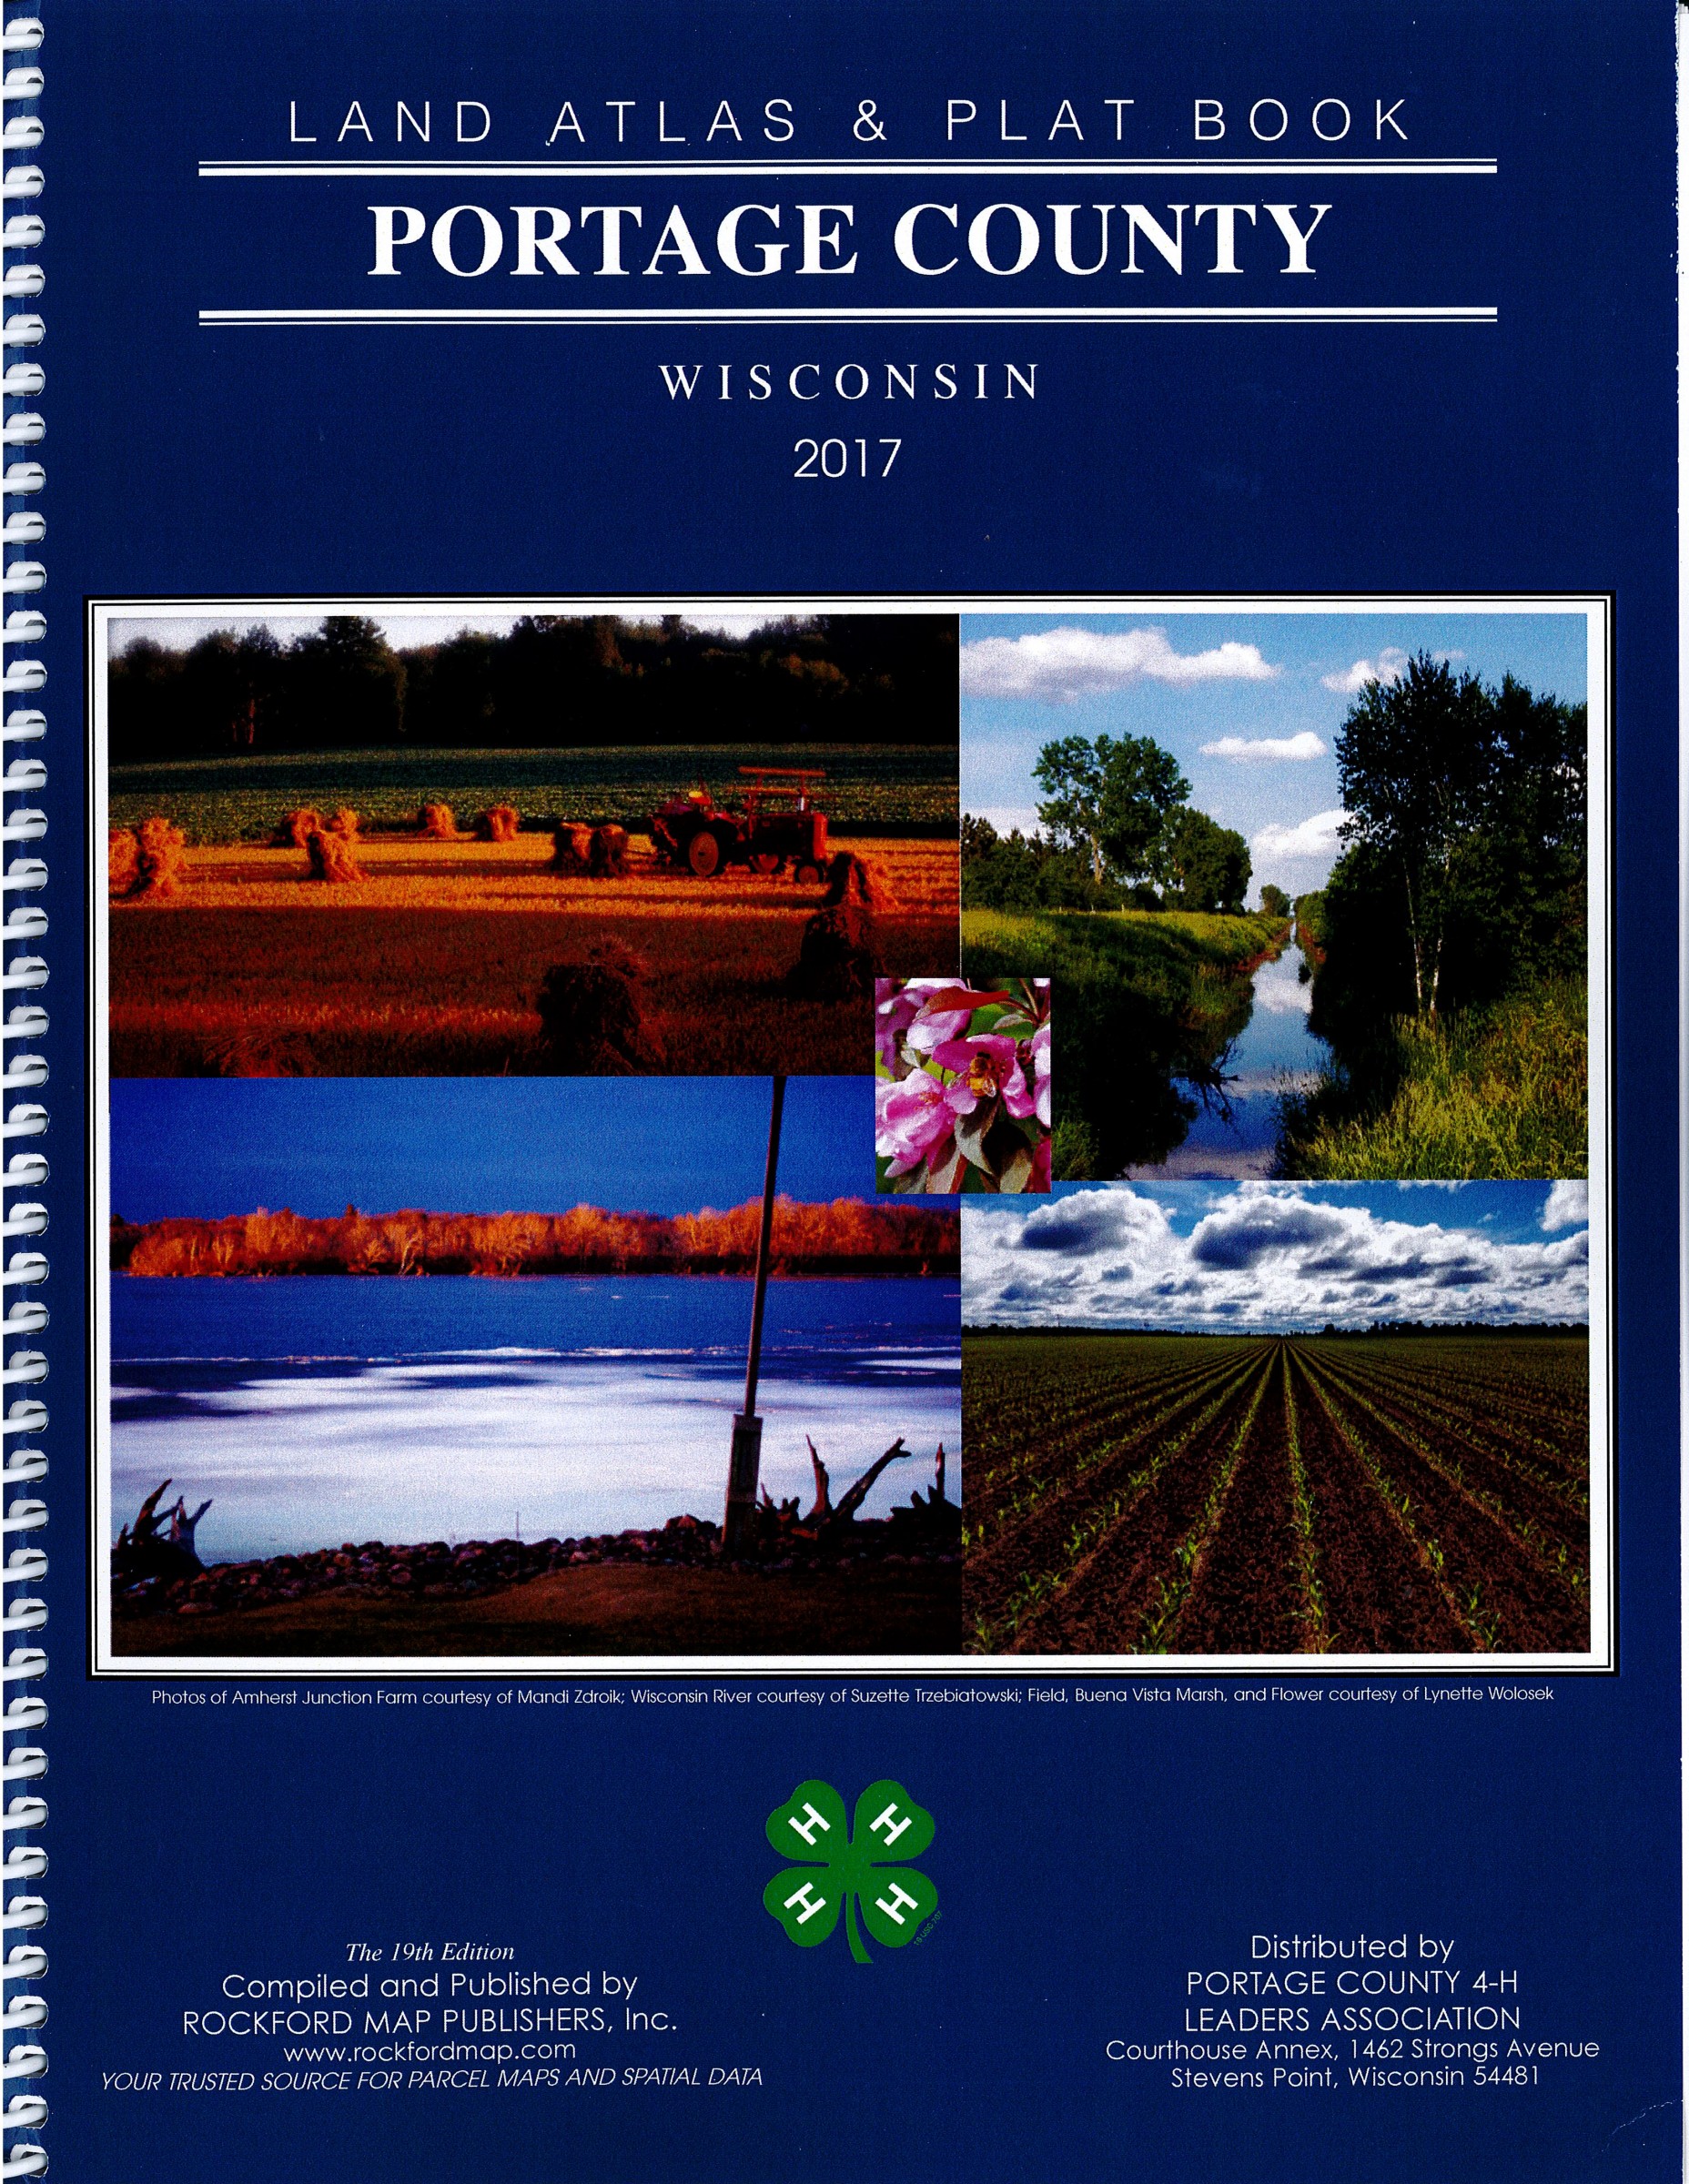 portage county public records